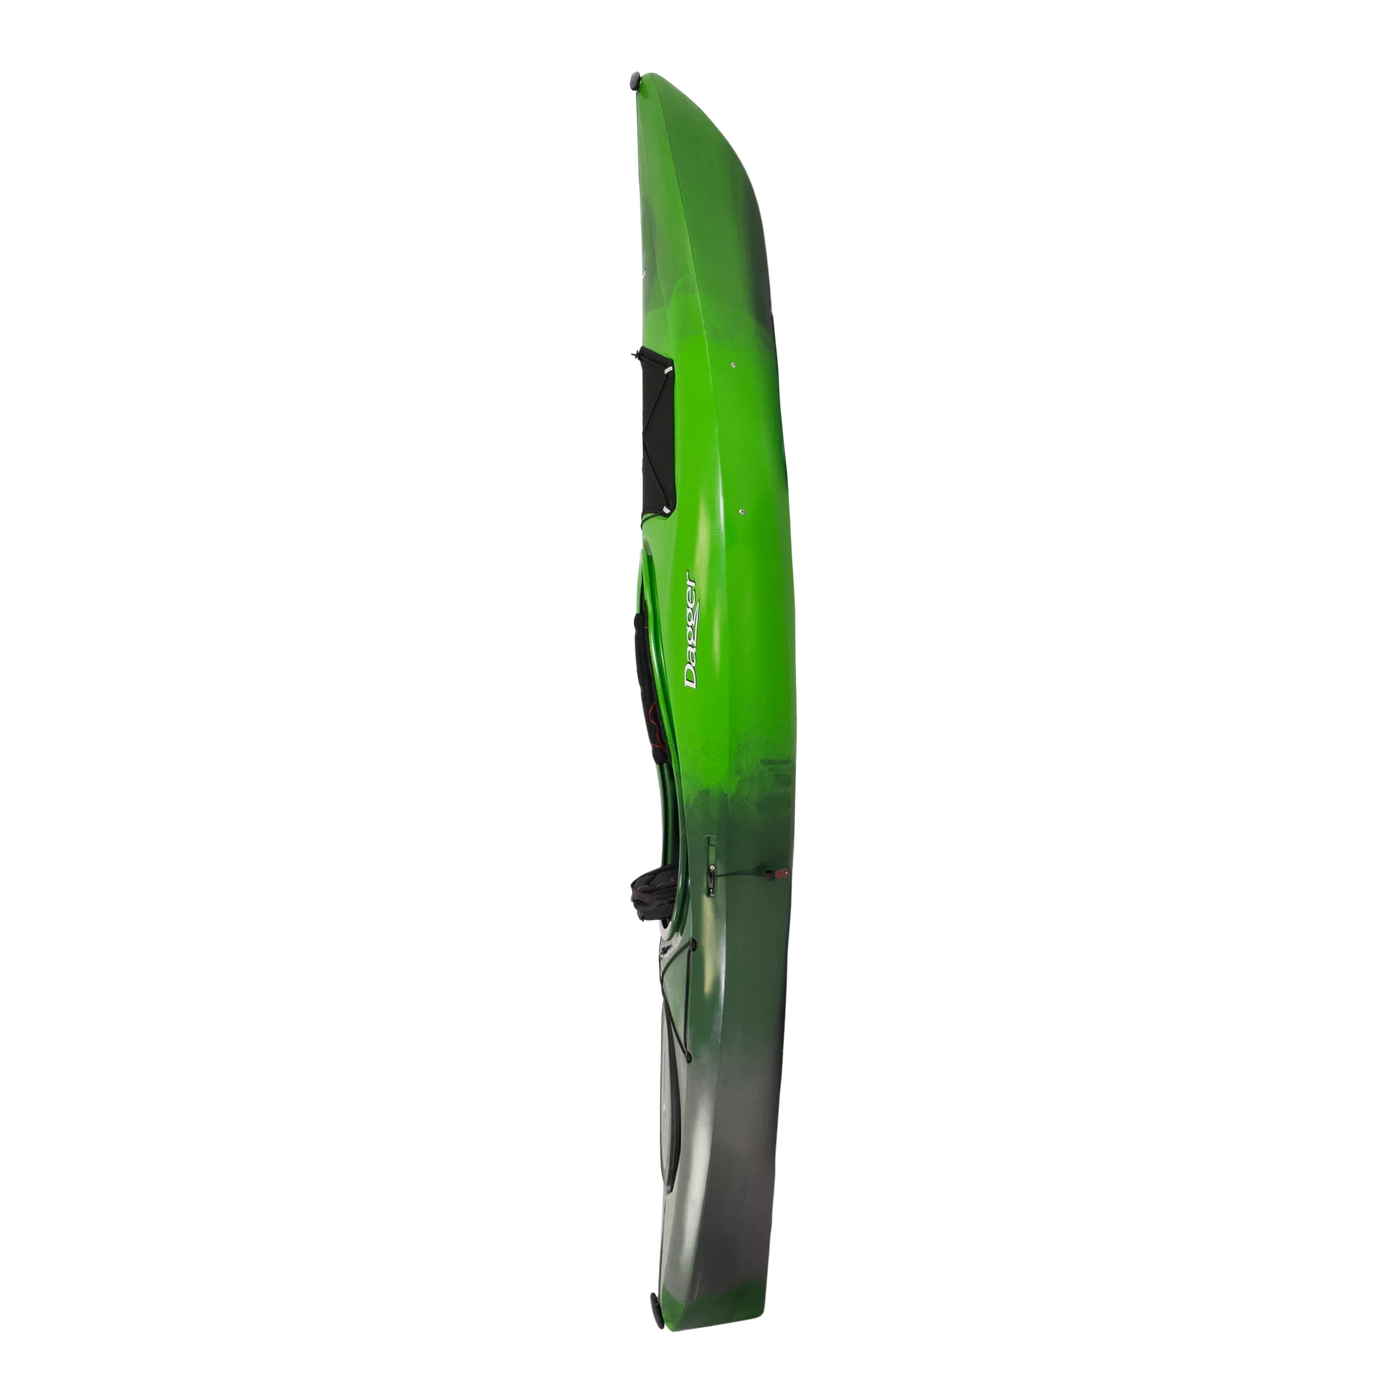 dagger axis 12.0 green side